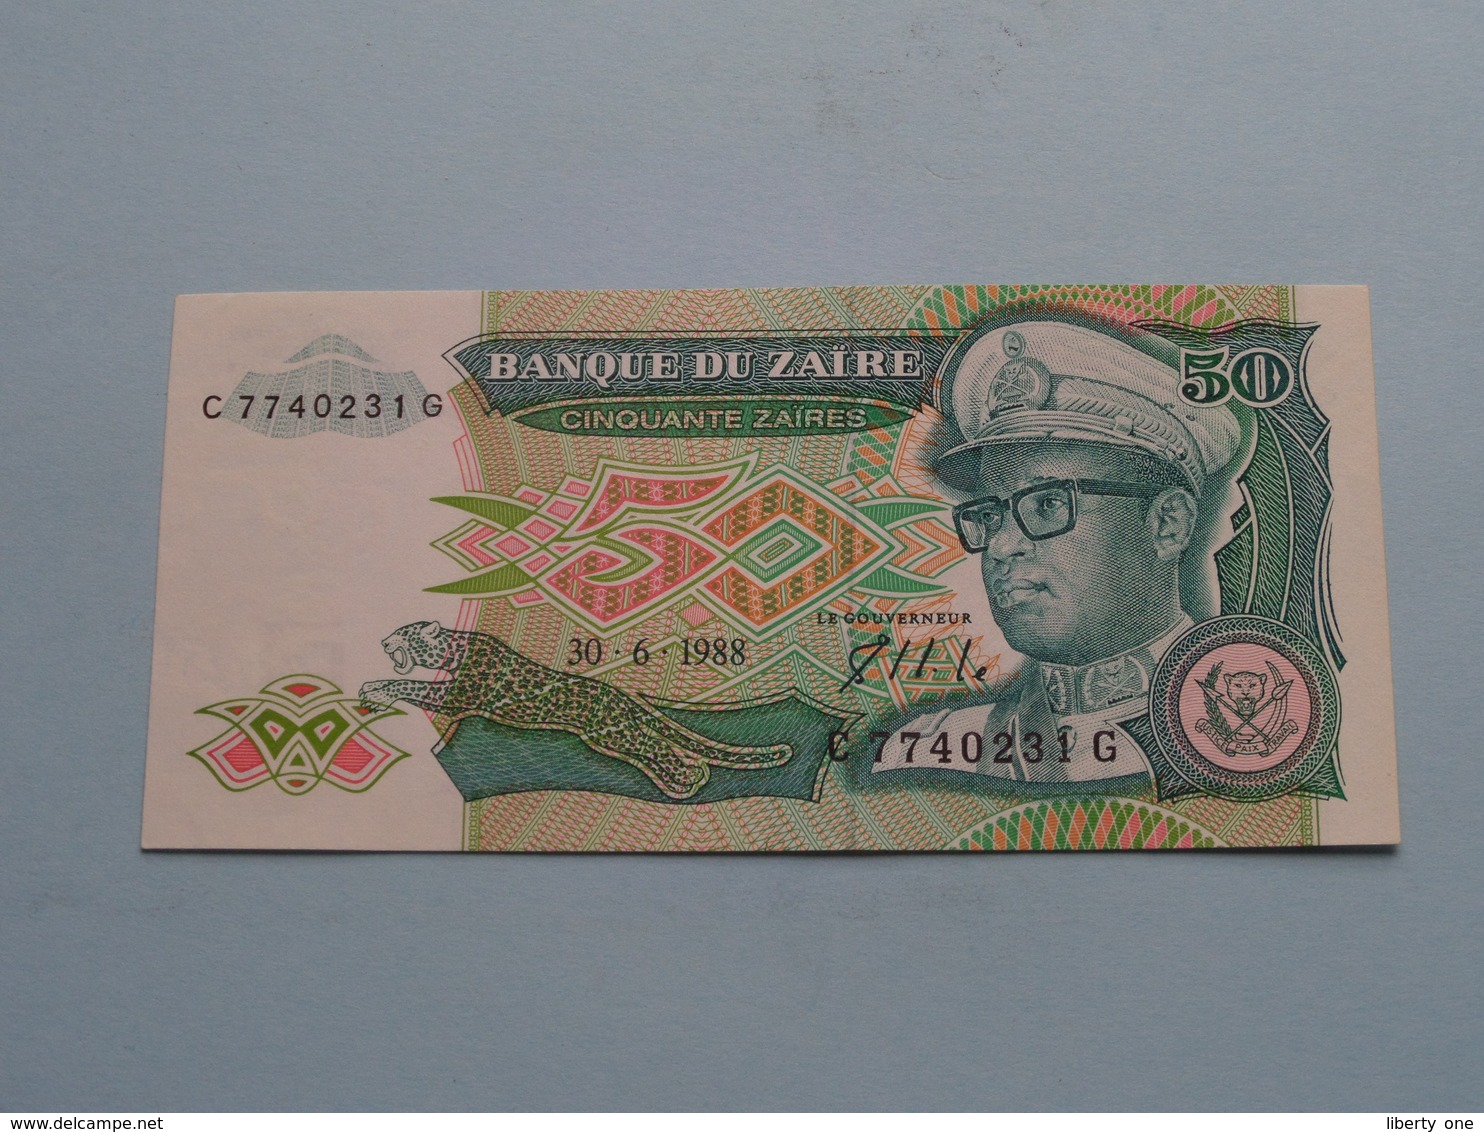 Cinquante Zaïres 50 ( C 7740231 G ) 30-6-1988 Banque Du ZAIRE ( For Grade, Please See Photo ) ! - Zaïre